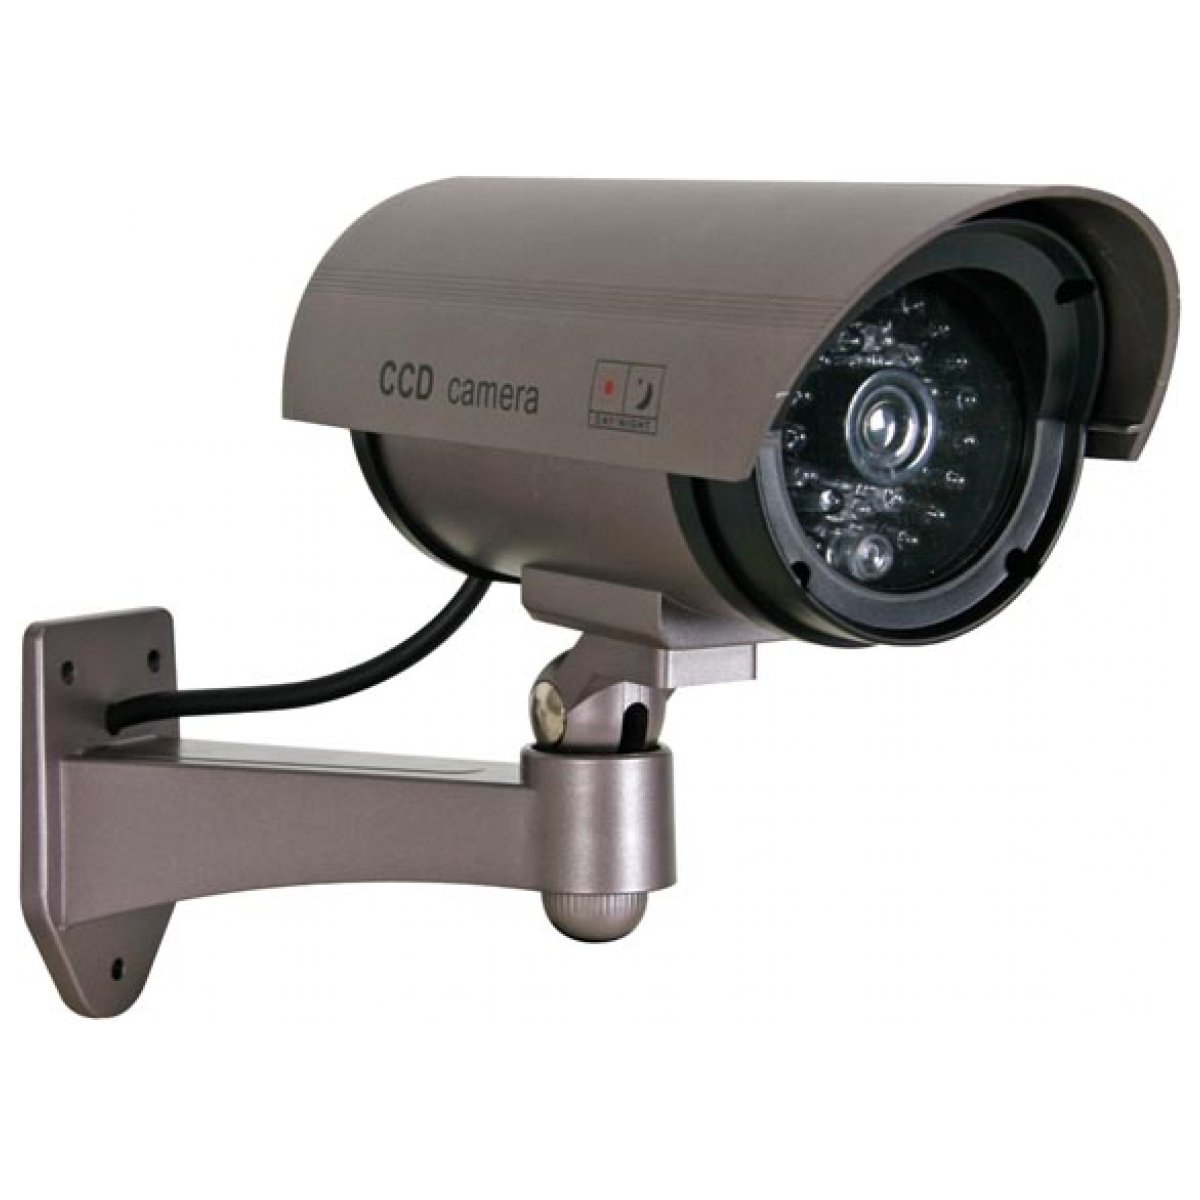 Видеокамера наблюдения. Waterproof ir Camera model l751g13n камера видеонаблюдения. Камера слежения JK-868. Видеокамера DINIONXF 0495/51 LTC дневного/ночного наблюдения с ПЗС формата 1/3". RVI-nc2055m4.